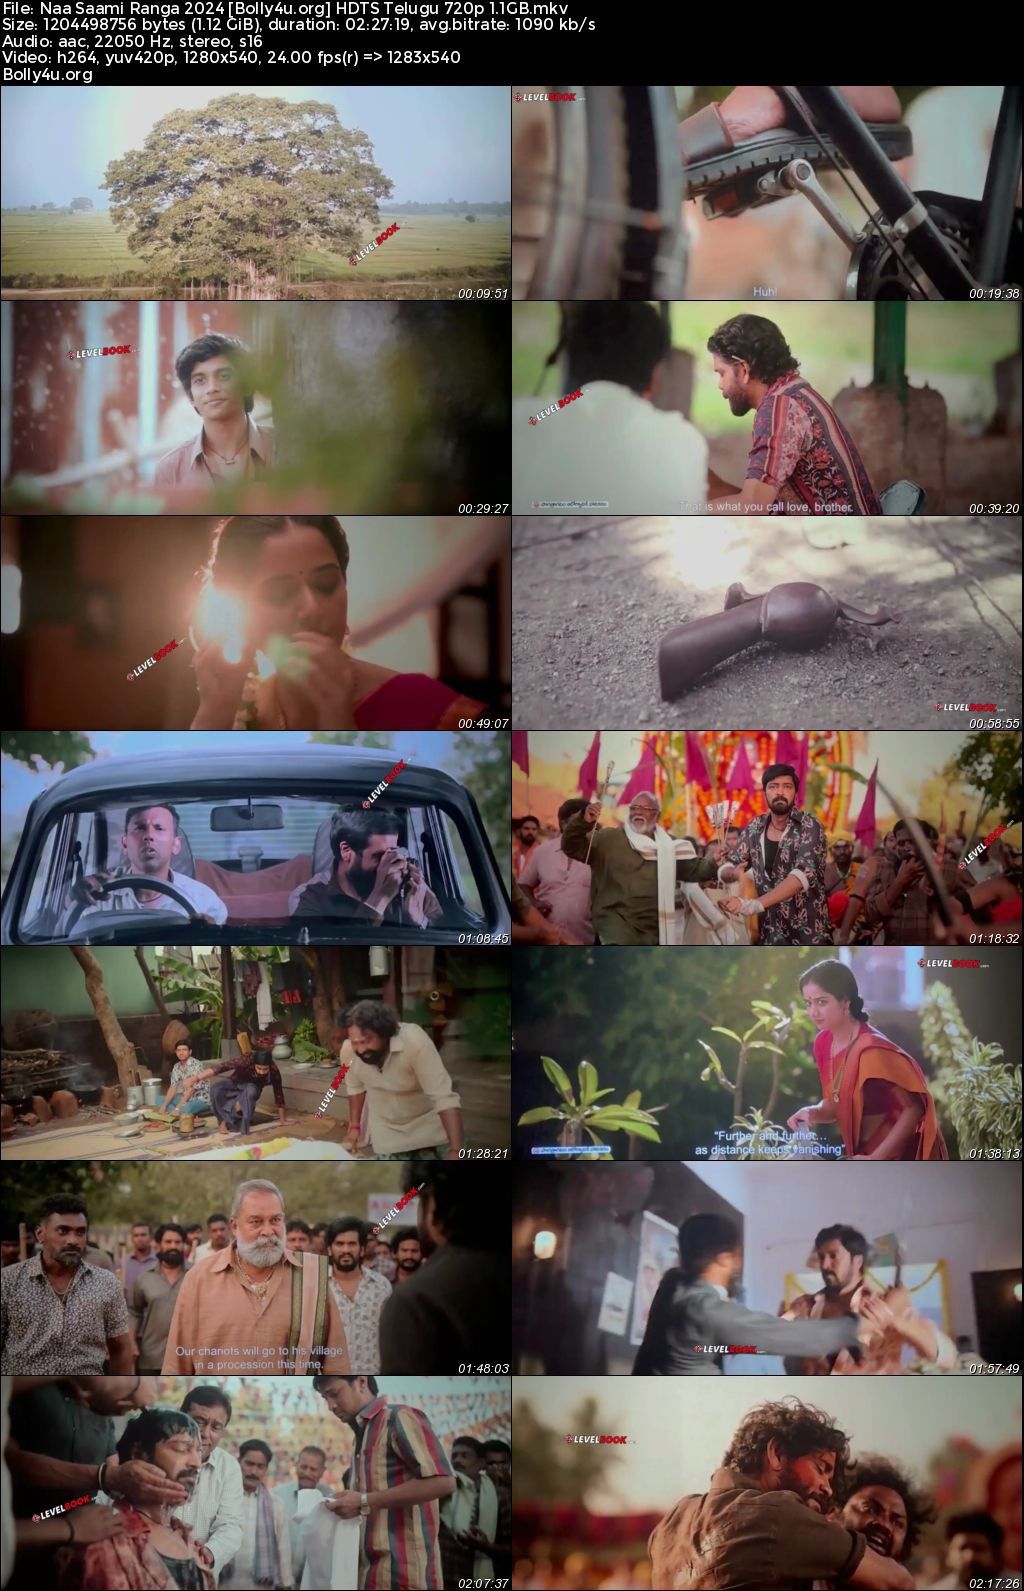 Naa Saami Ranga 2024 HDTS Telugu Full Movie Download 720p 480p